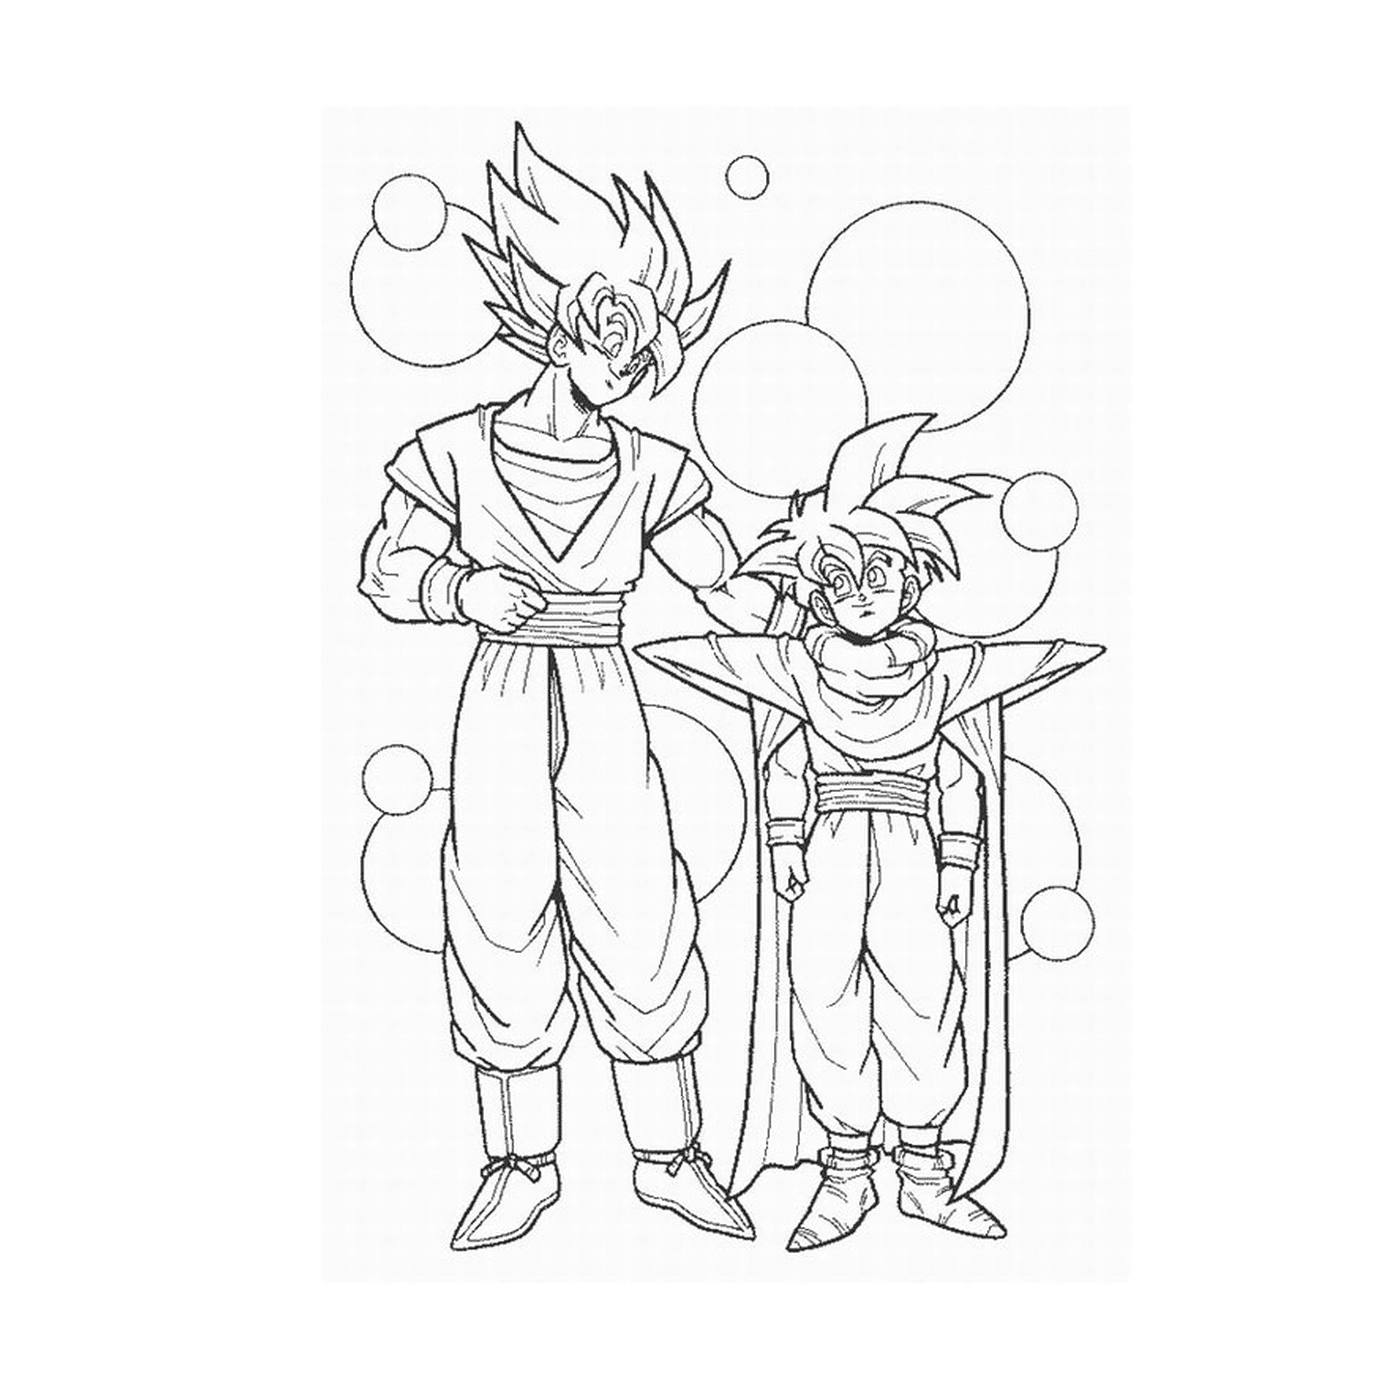  Goku und Vegeta, mächtige Krieger 